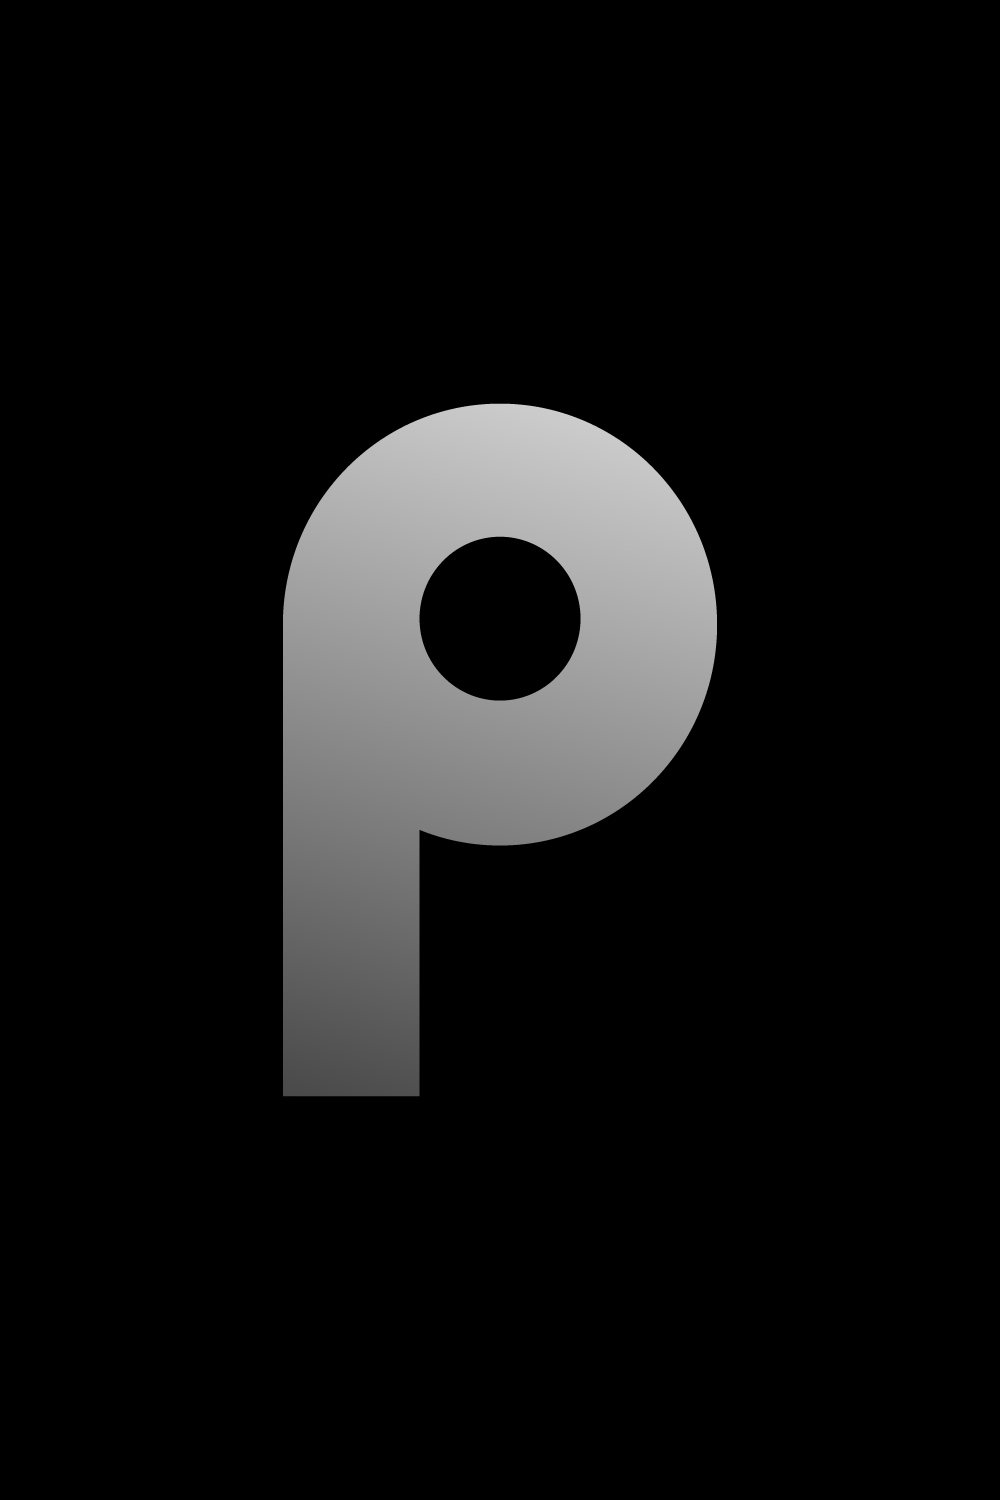 P Logo pinterest preview image.